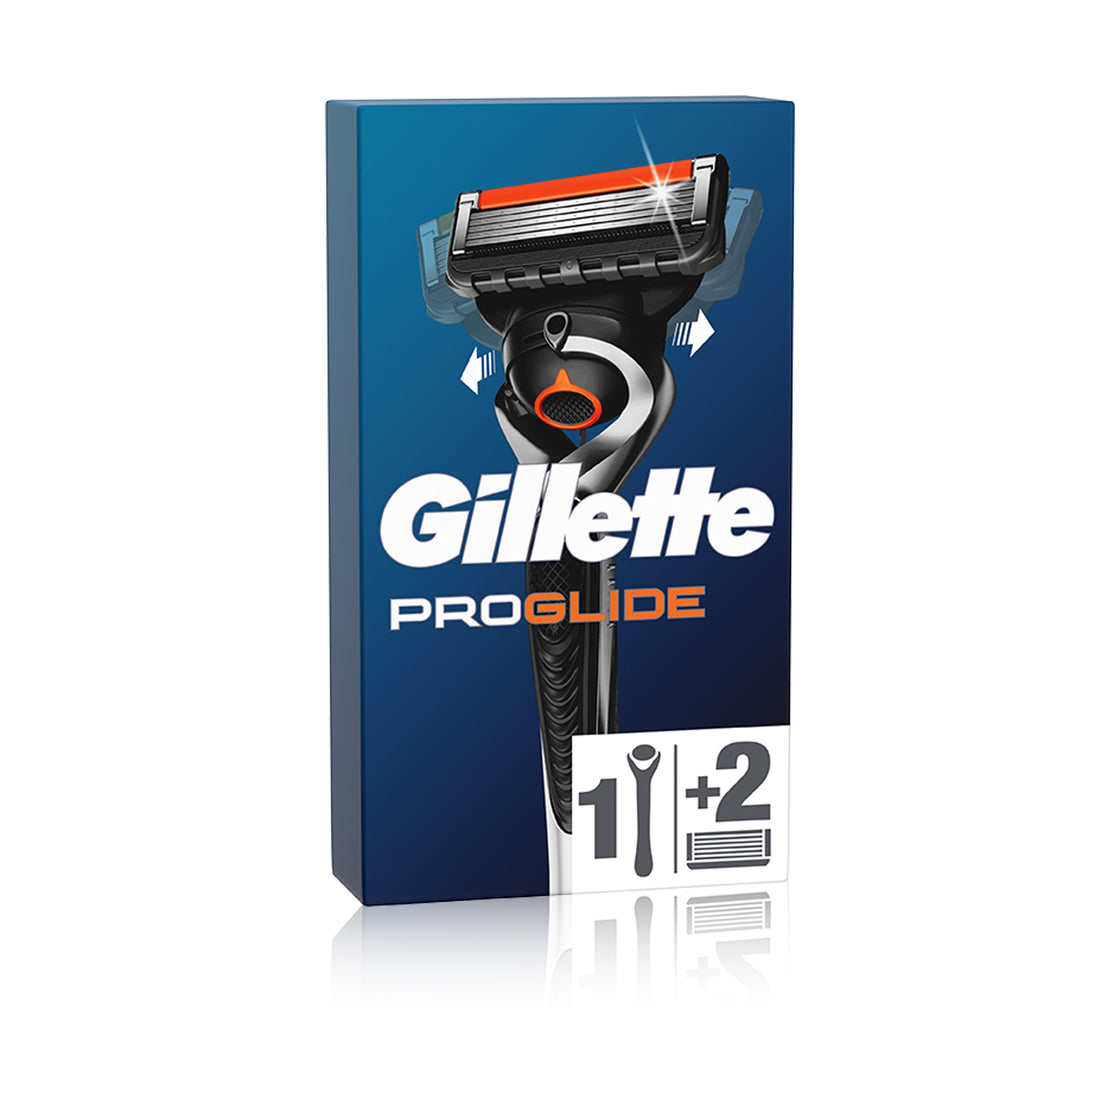 Gillette Proglide Batcharing Machine com 2 Relages